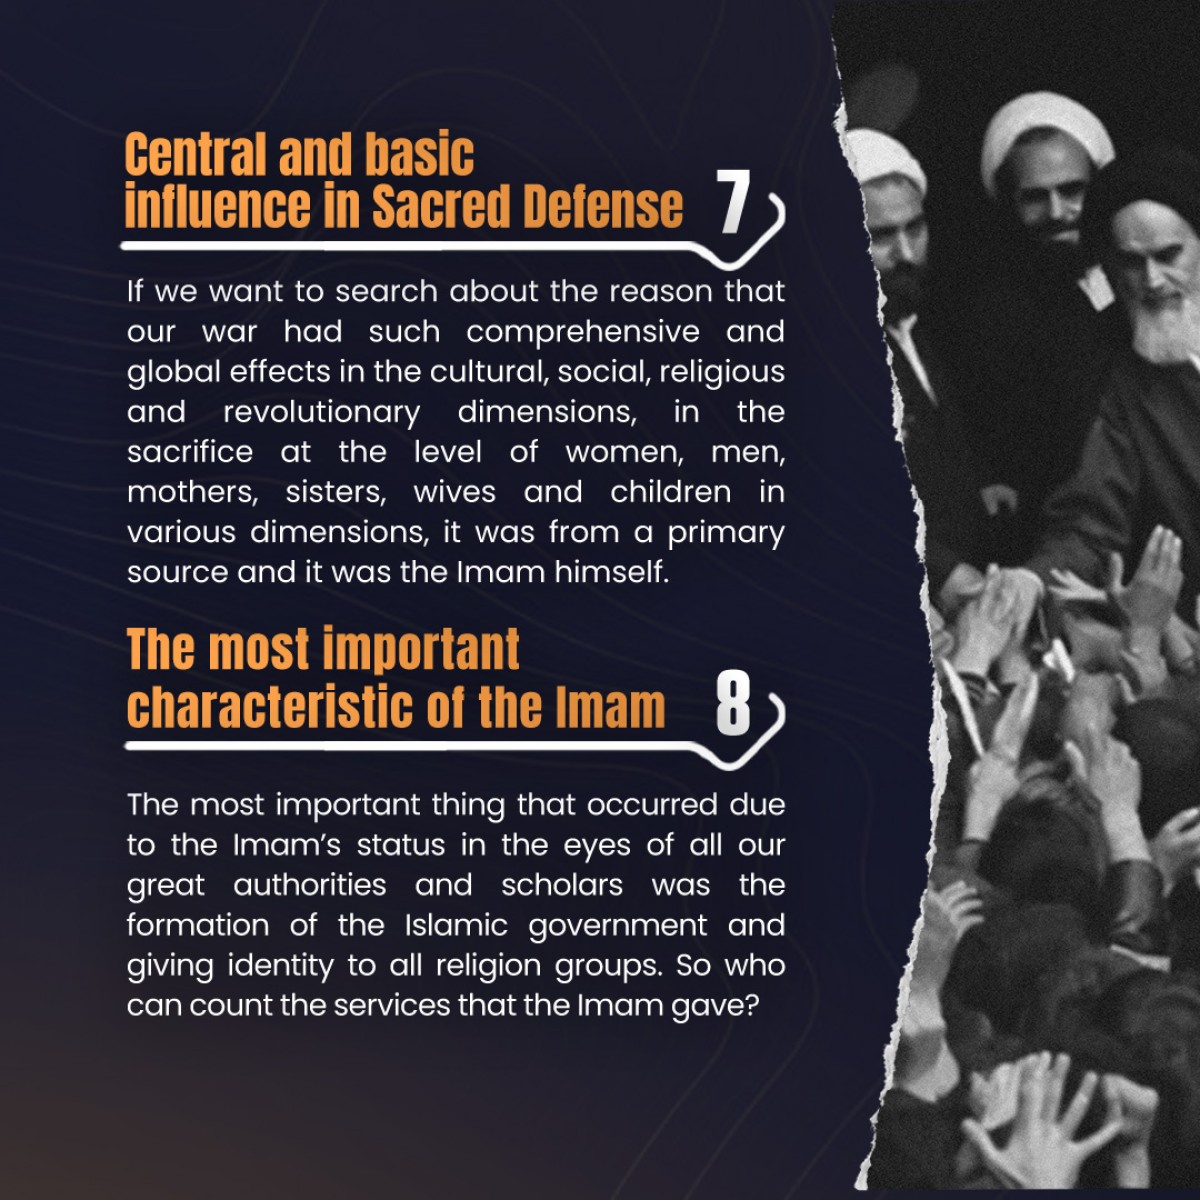 CHARACTERISTICS OF IMAM KHOMEINI IN THE WORDS OF THE MARTYR HAJJ QASSEM SOLEIMANI